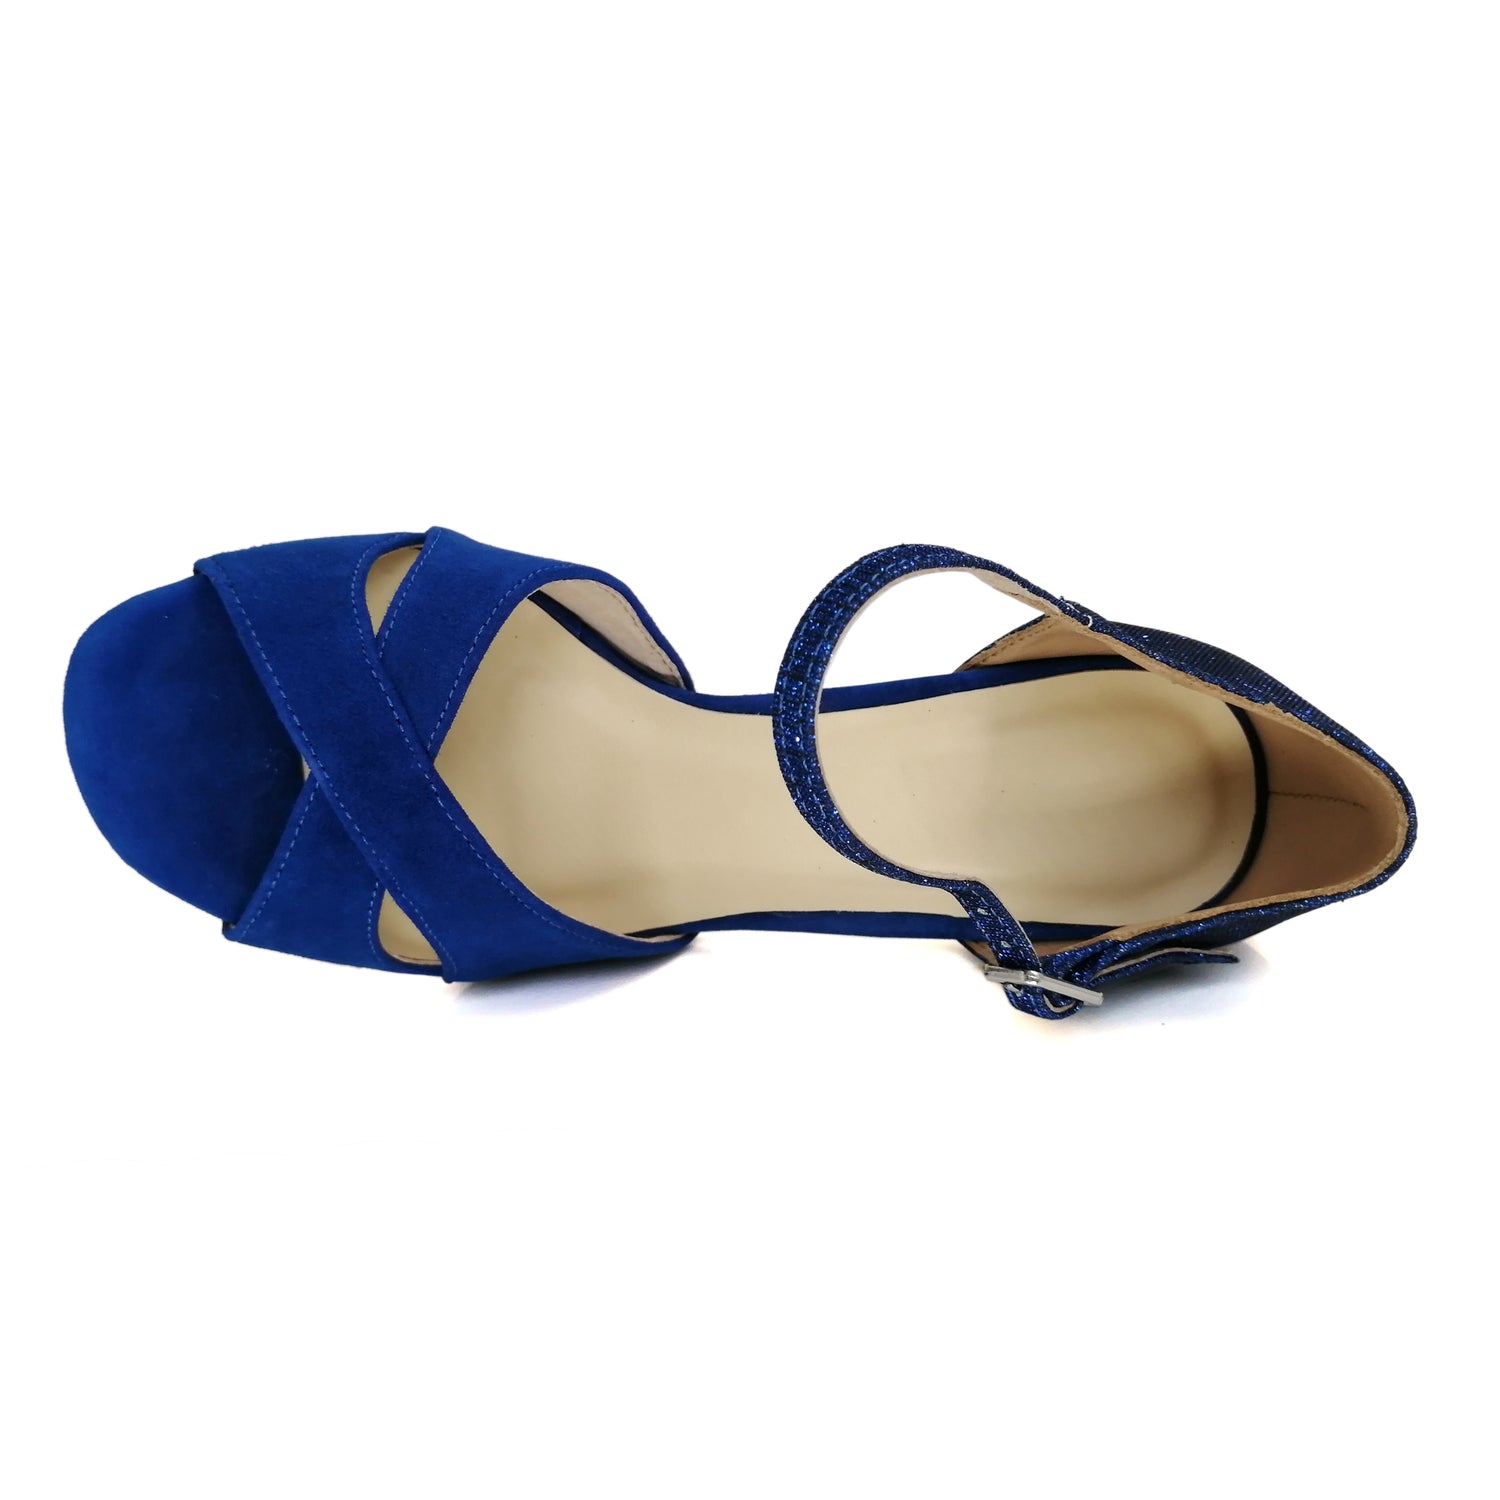 Pro Dancer Women's Argentine Tango Shoes High Heel Dance Sandals Leather Sole Blue PD9039A6